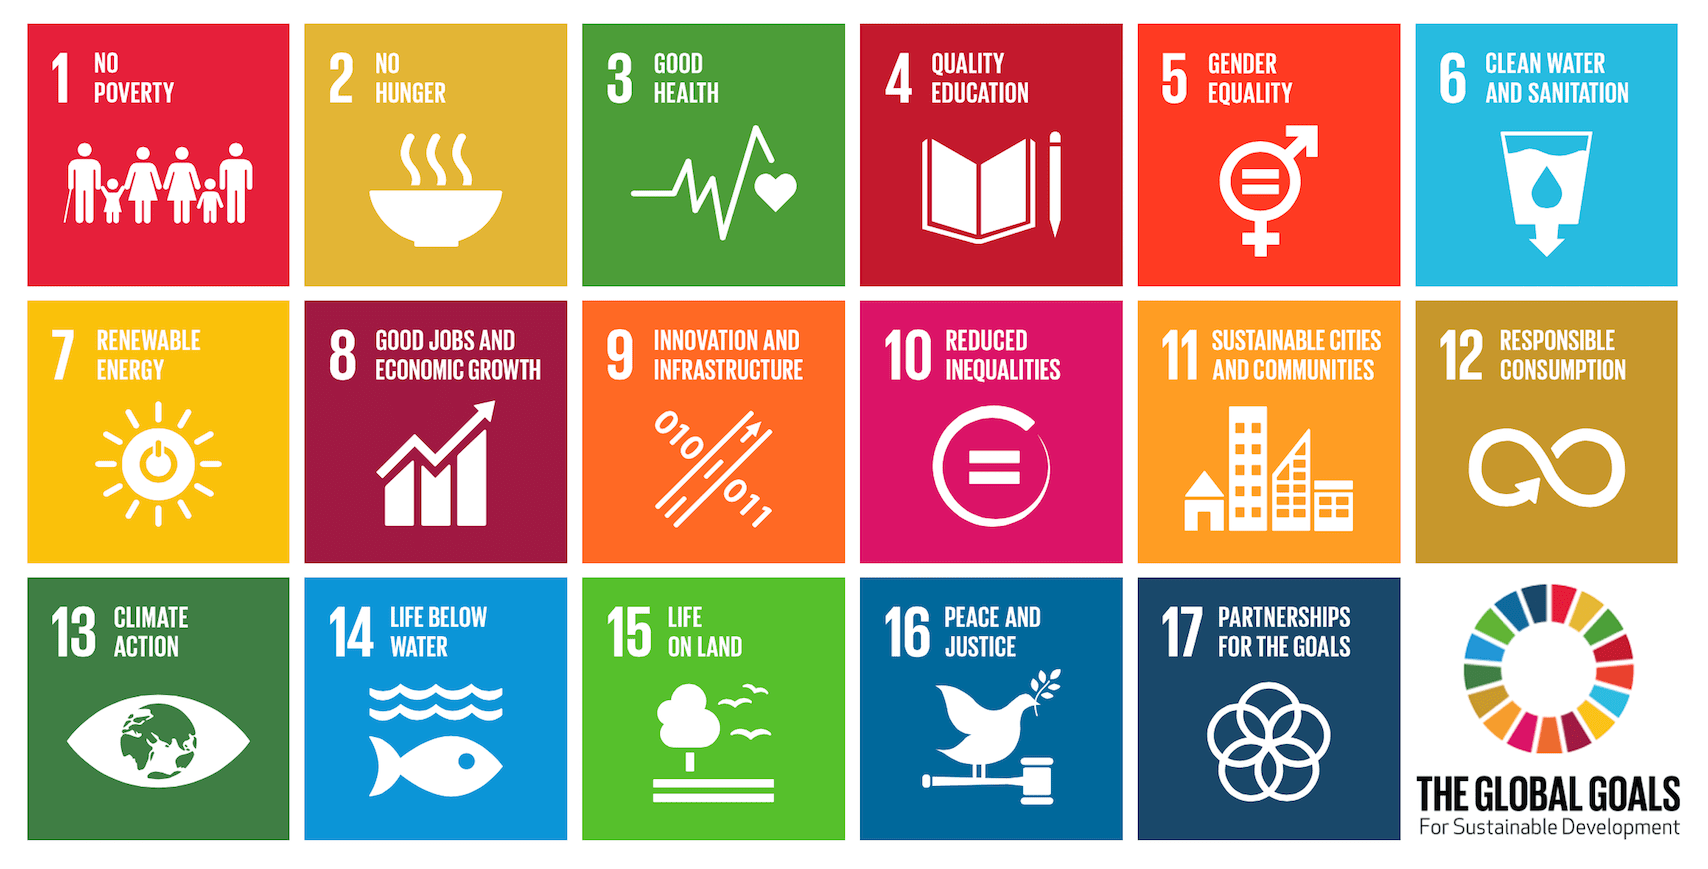 6 Sustainable Development Goals